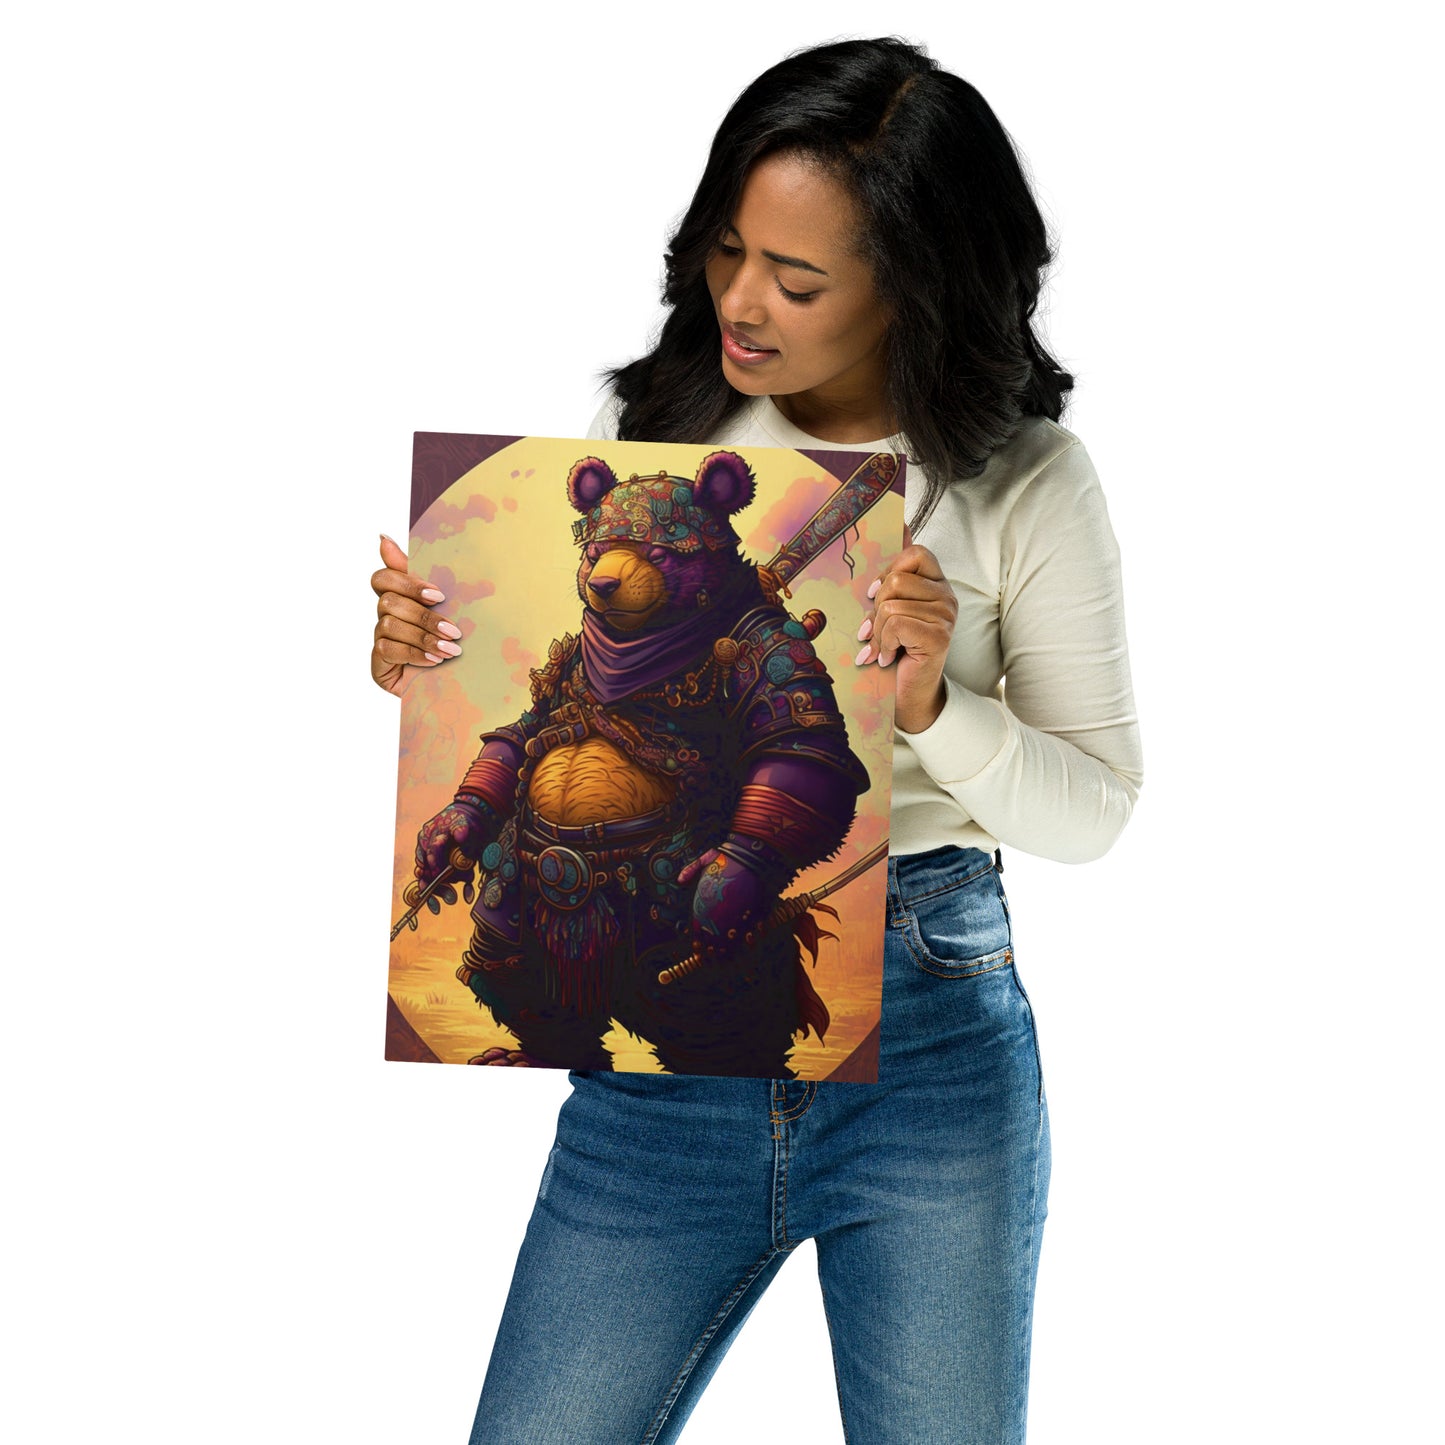 Samurai Pooh Bear 1.0 Metal print